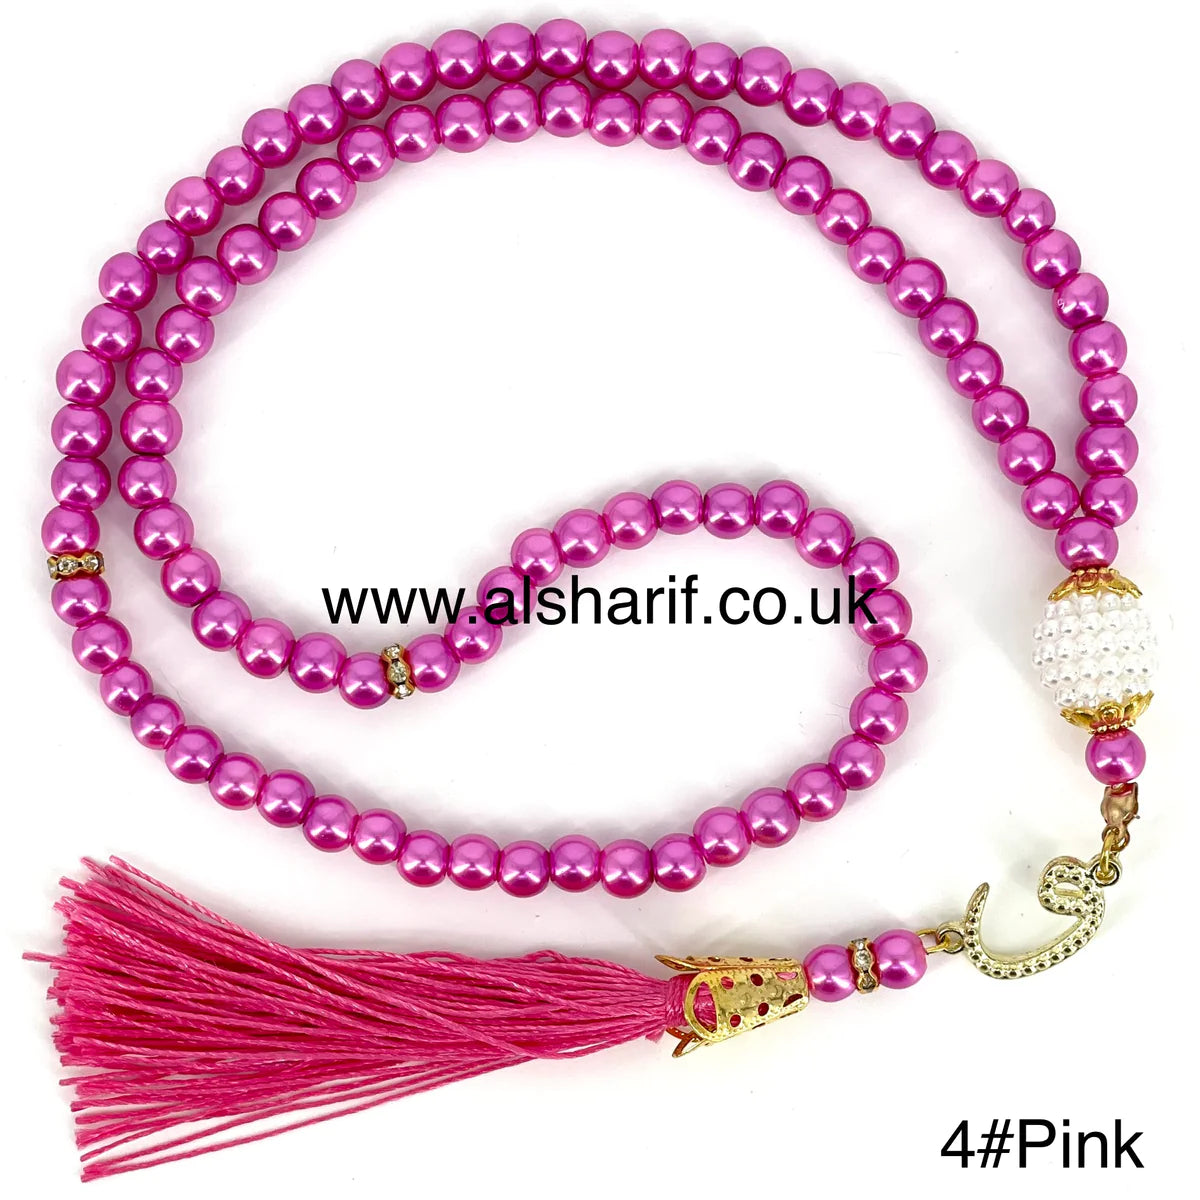 Tasbeeh 99 Beads 4#Pink